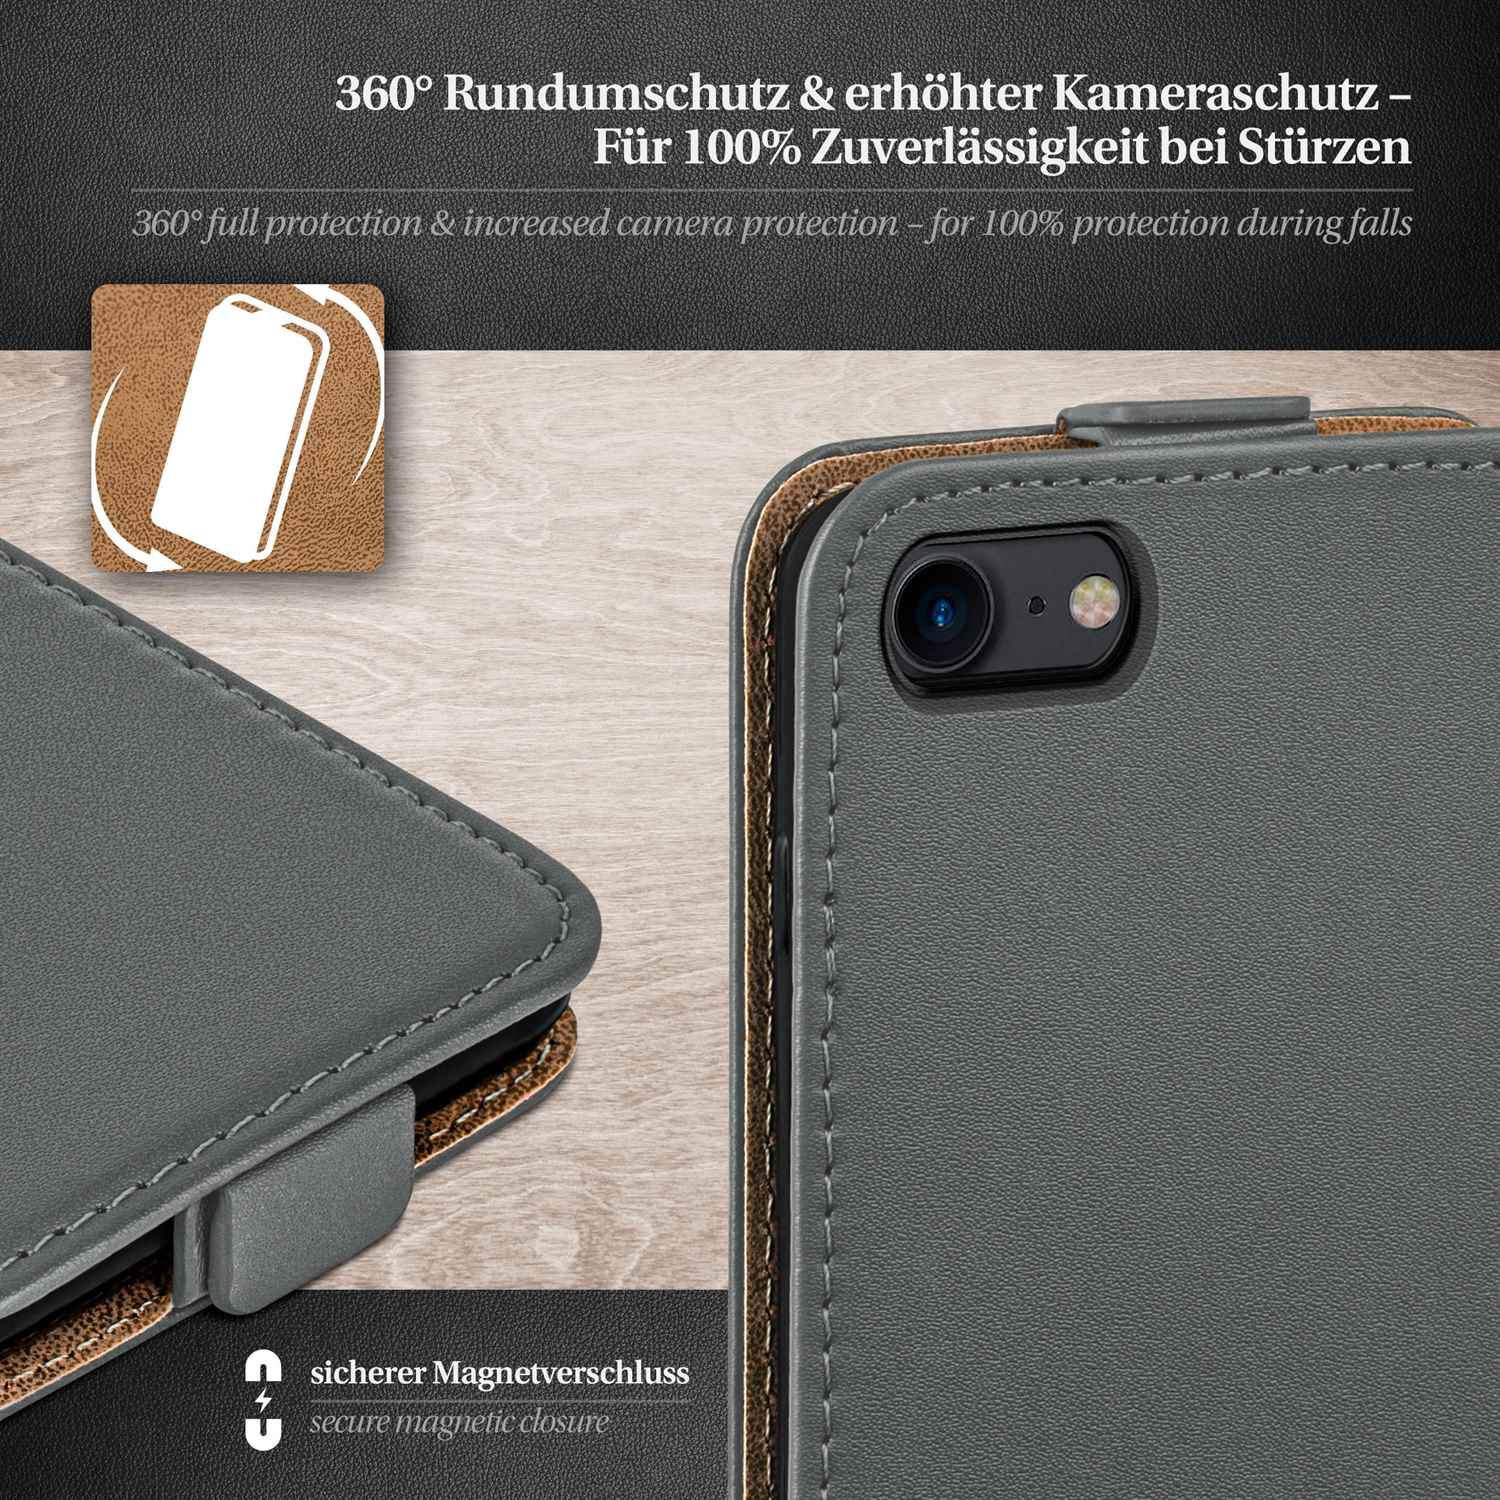 8, Anthracite-Gray Flip MOEX Cover, Flip iPhone Case, Apple,